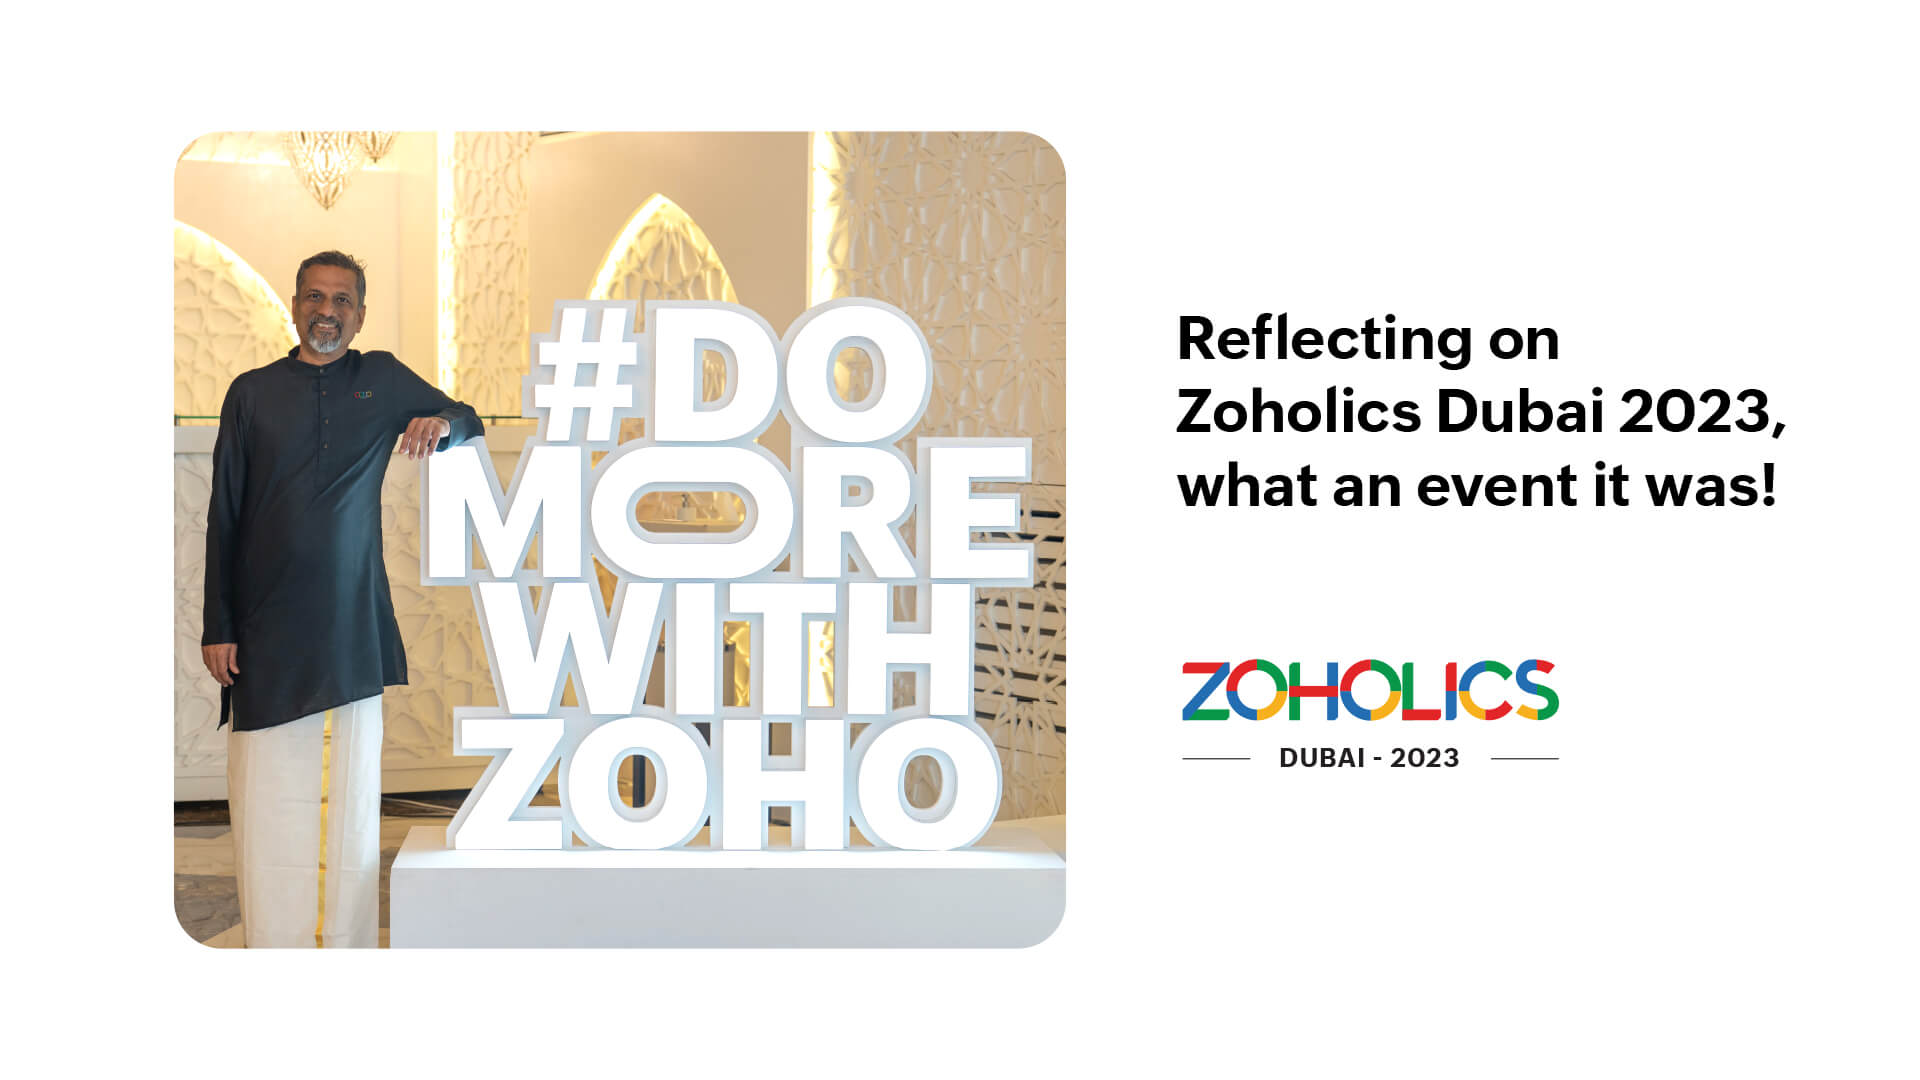 Zoholics Dubai 2023